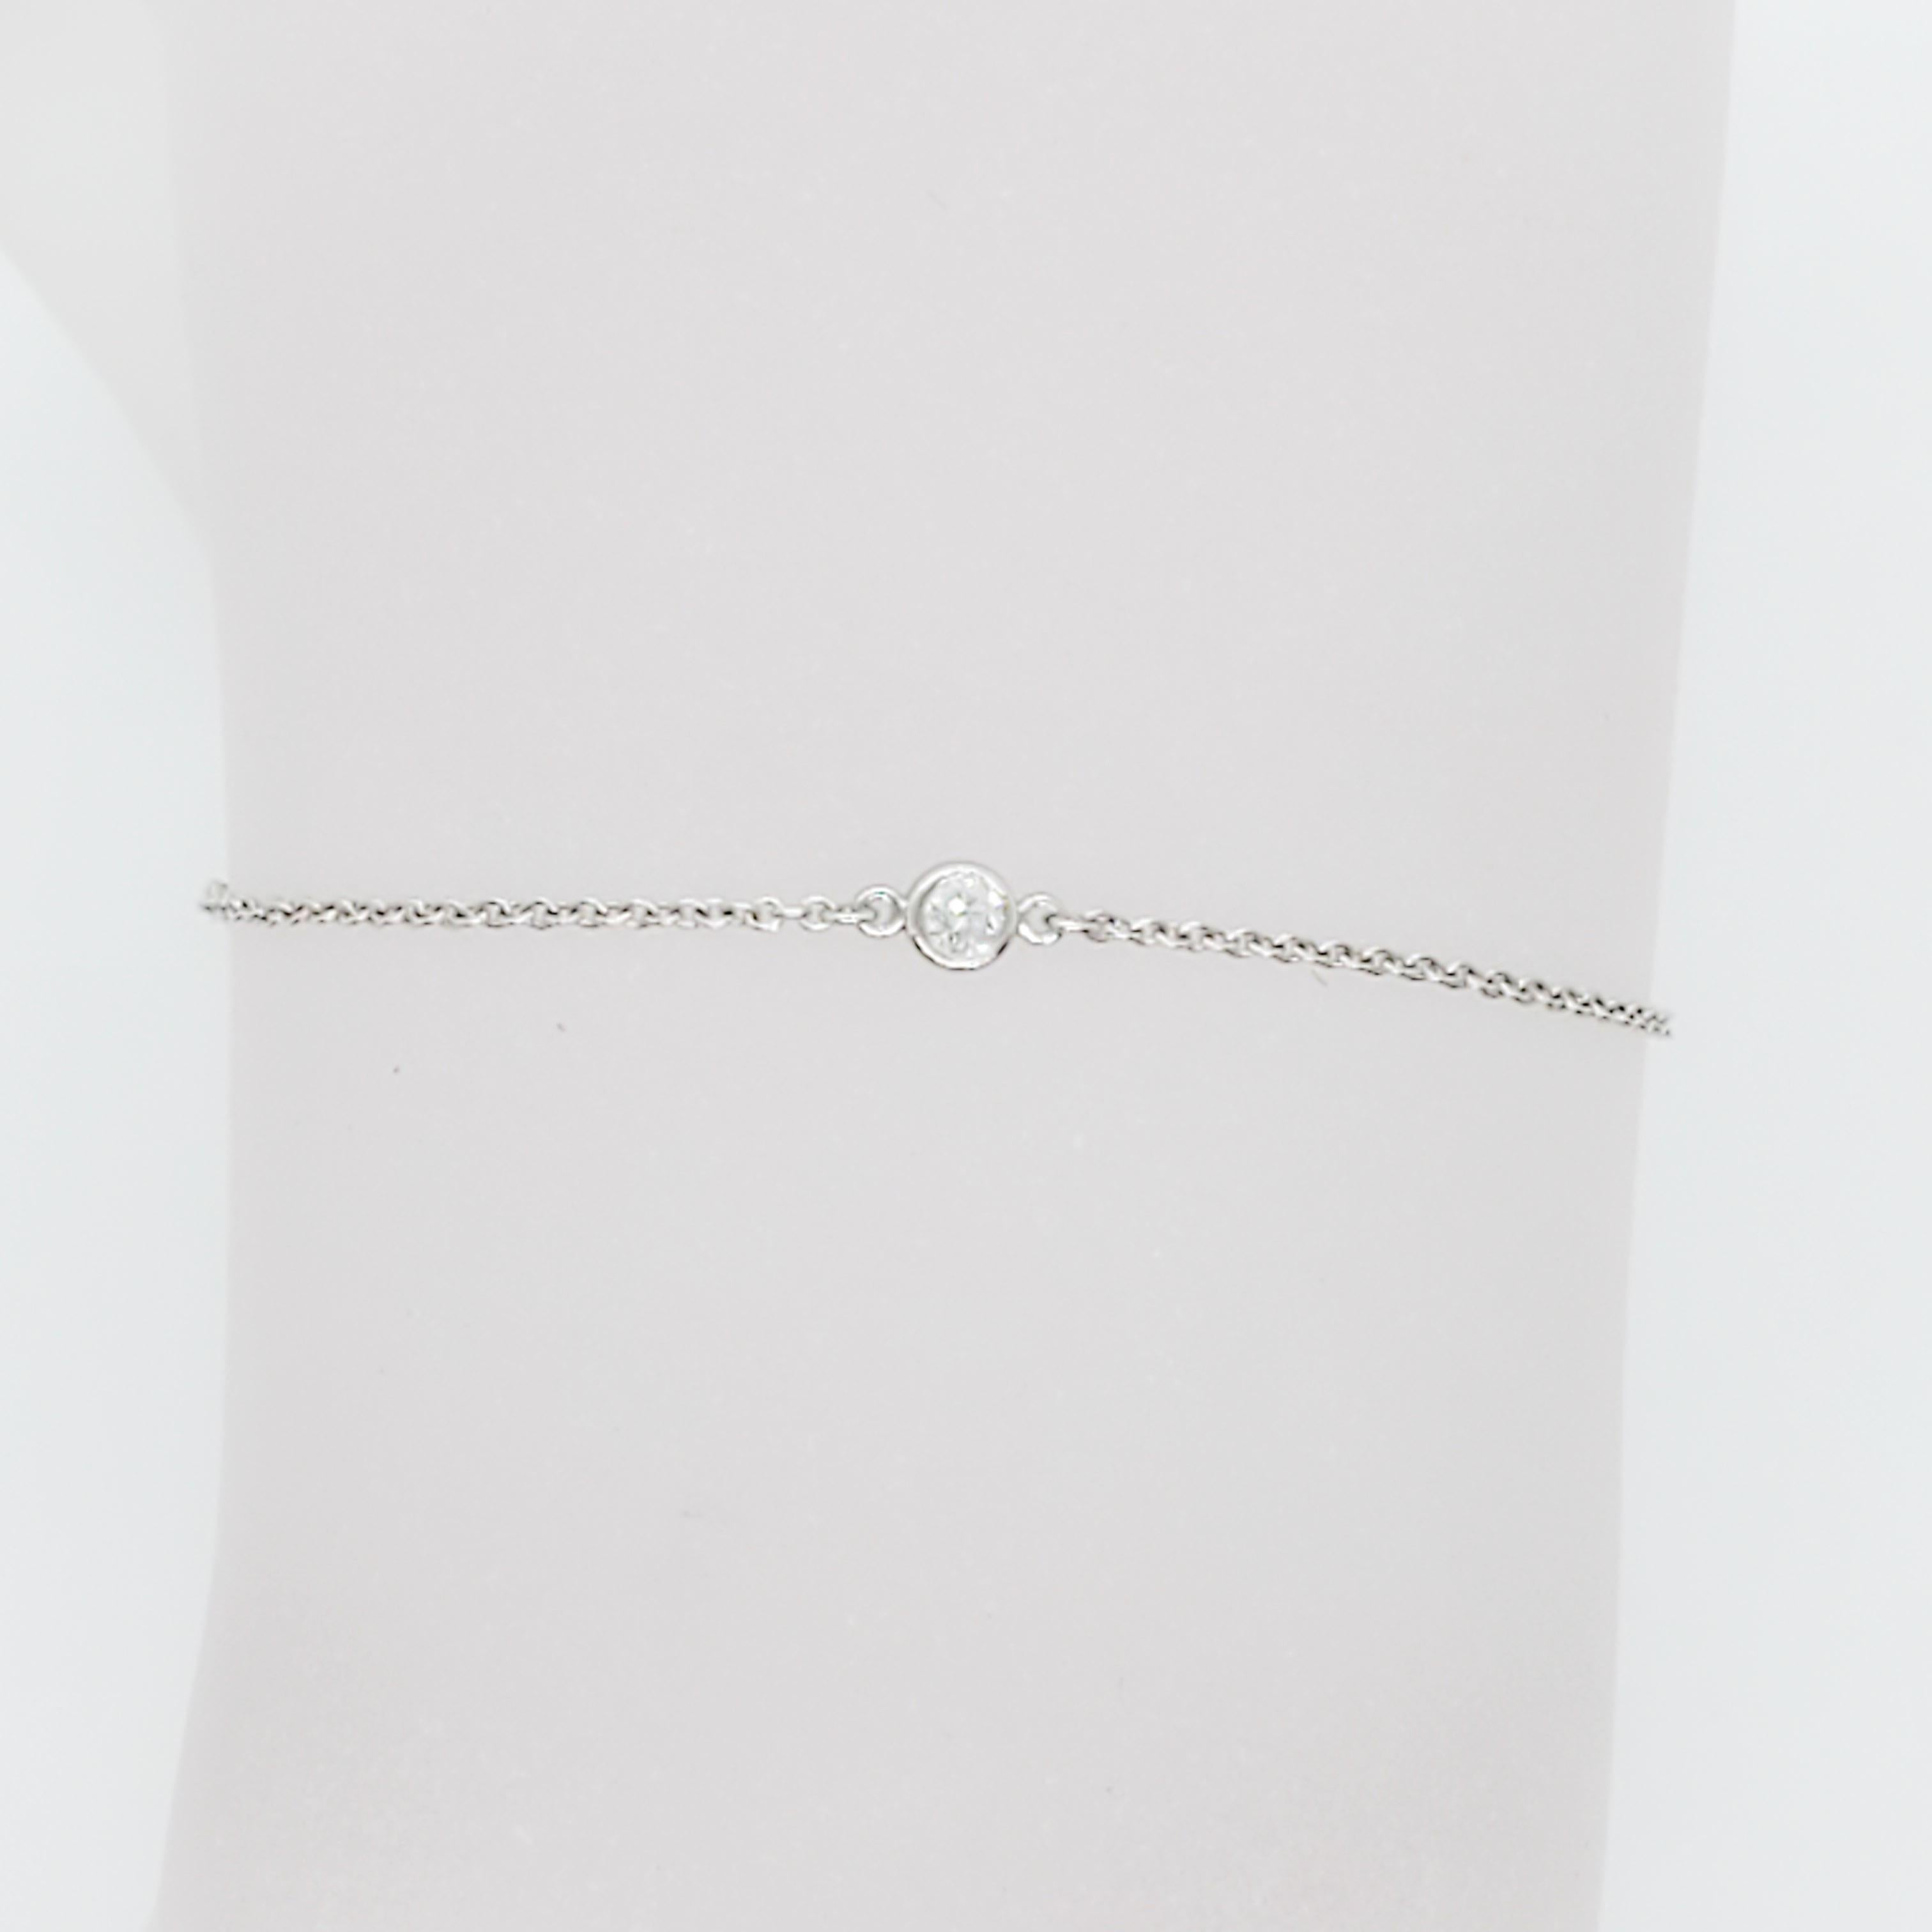 Round Cut Elsa Peretti for Tiffany & Co. Estate Diamond Bracelet in Platinum